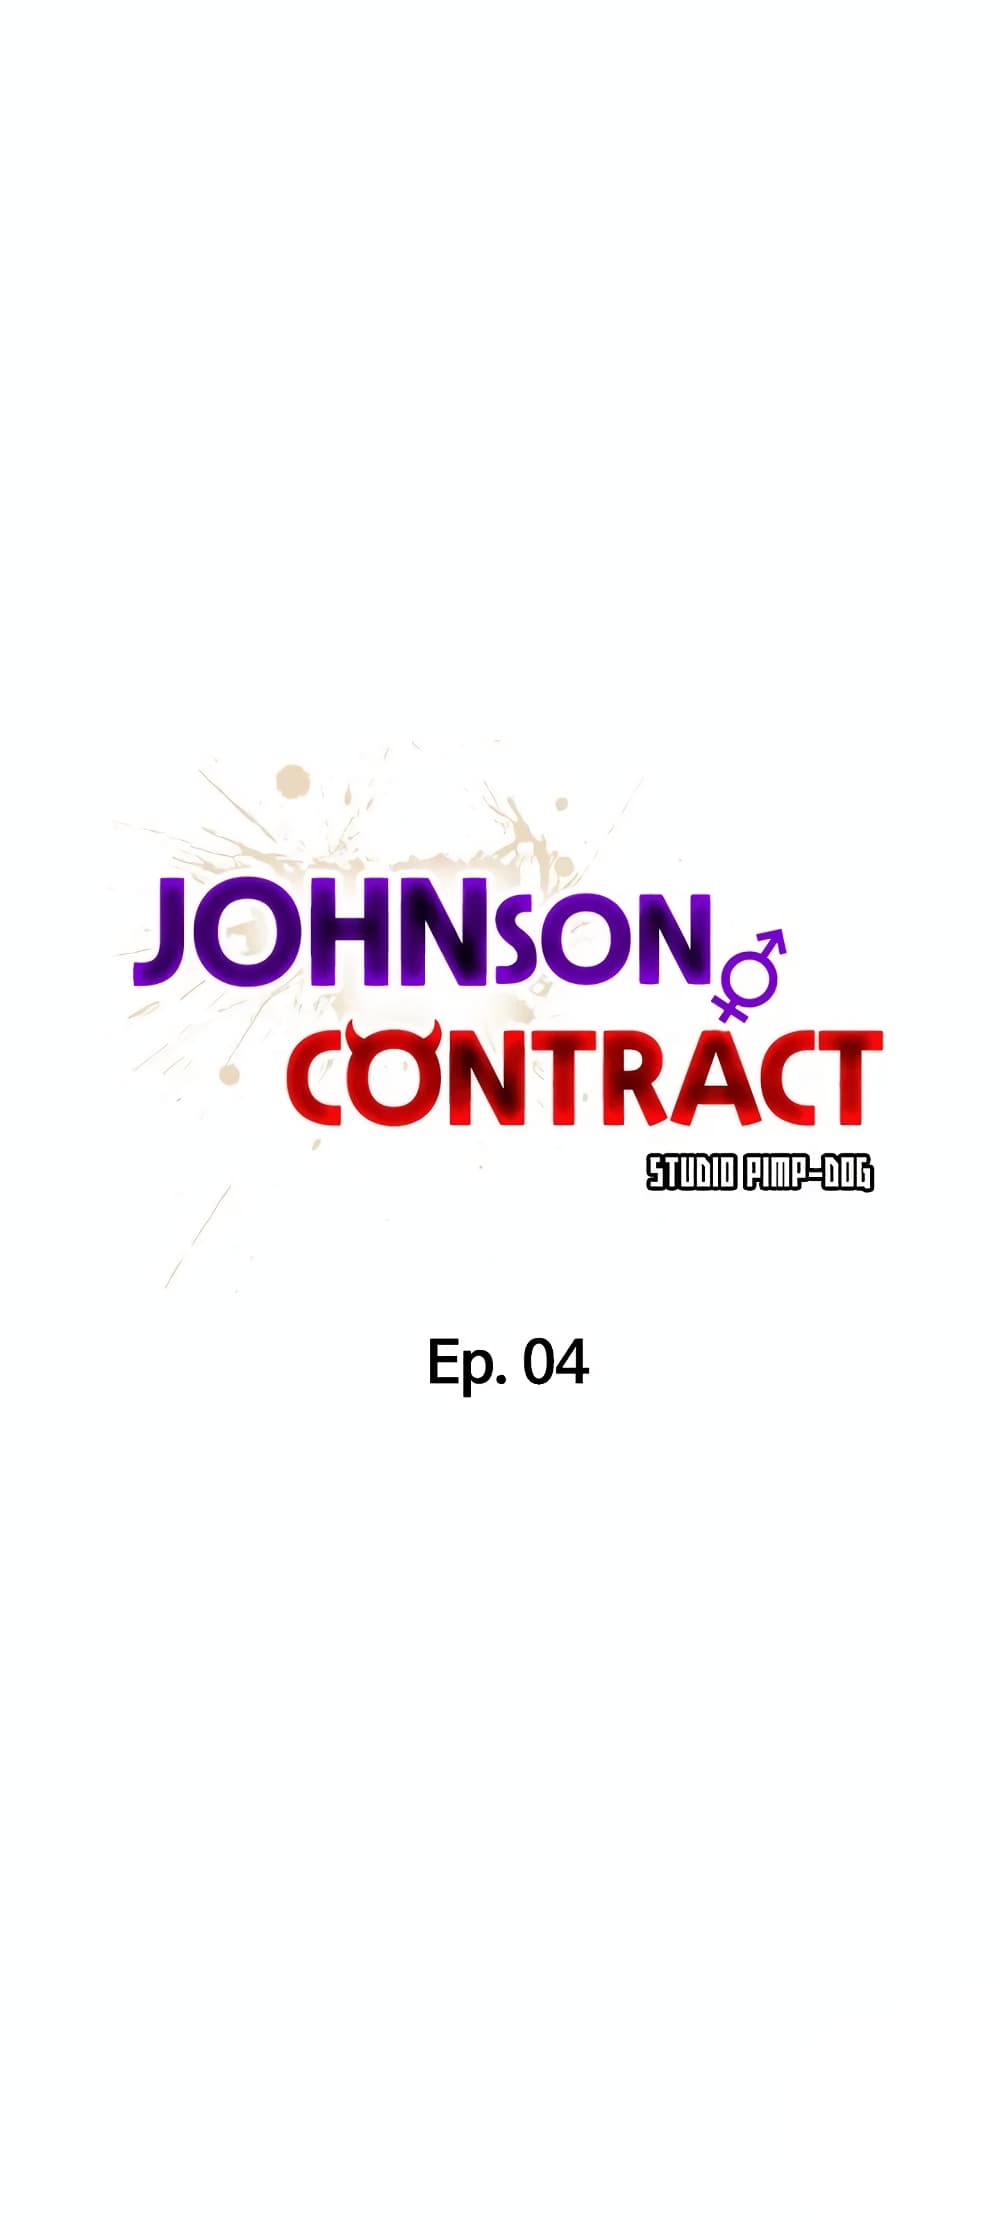 Johnson Contract 4-4